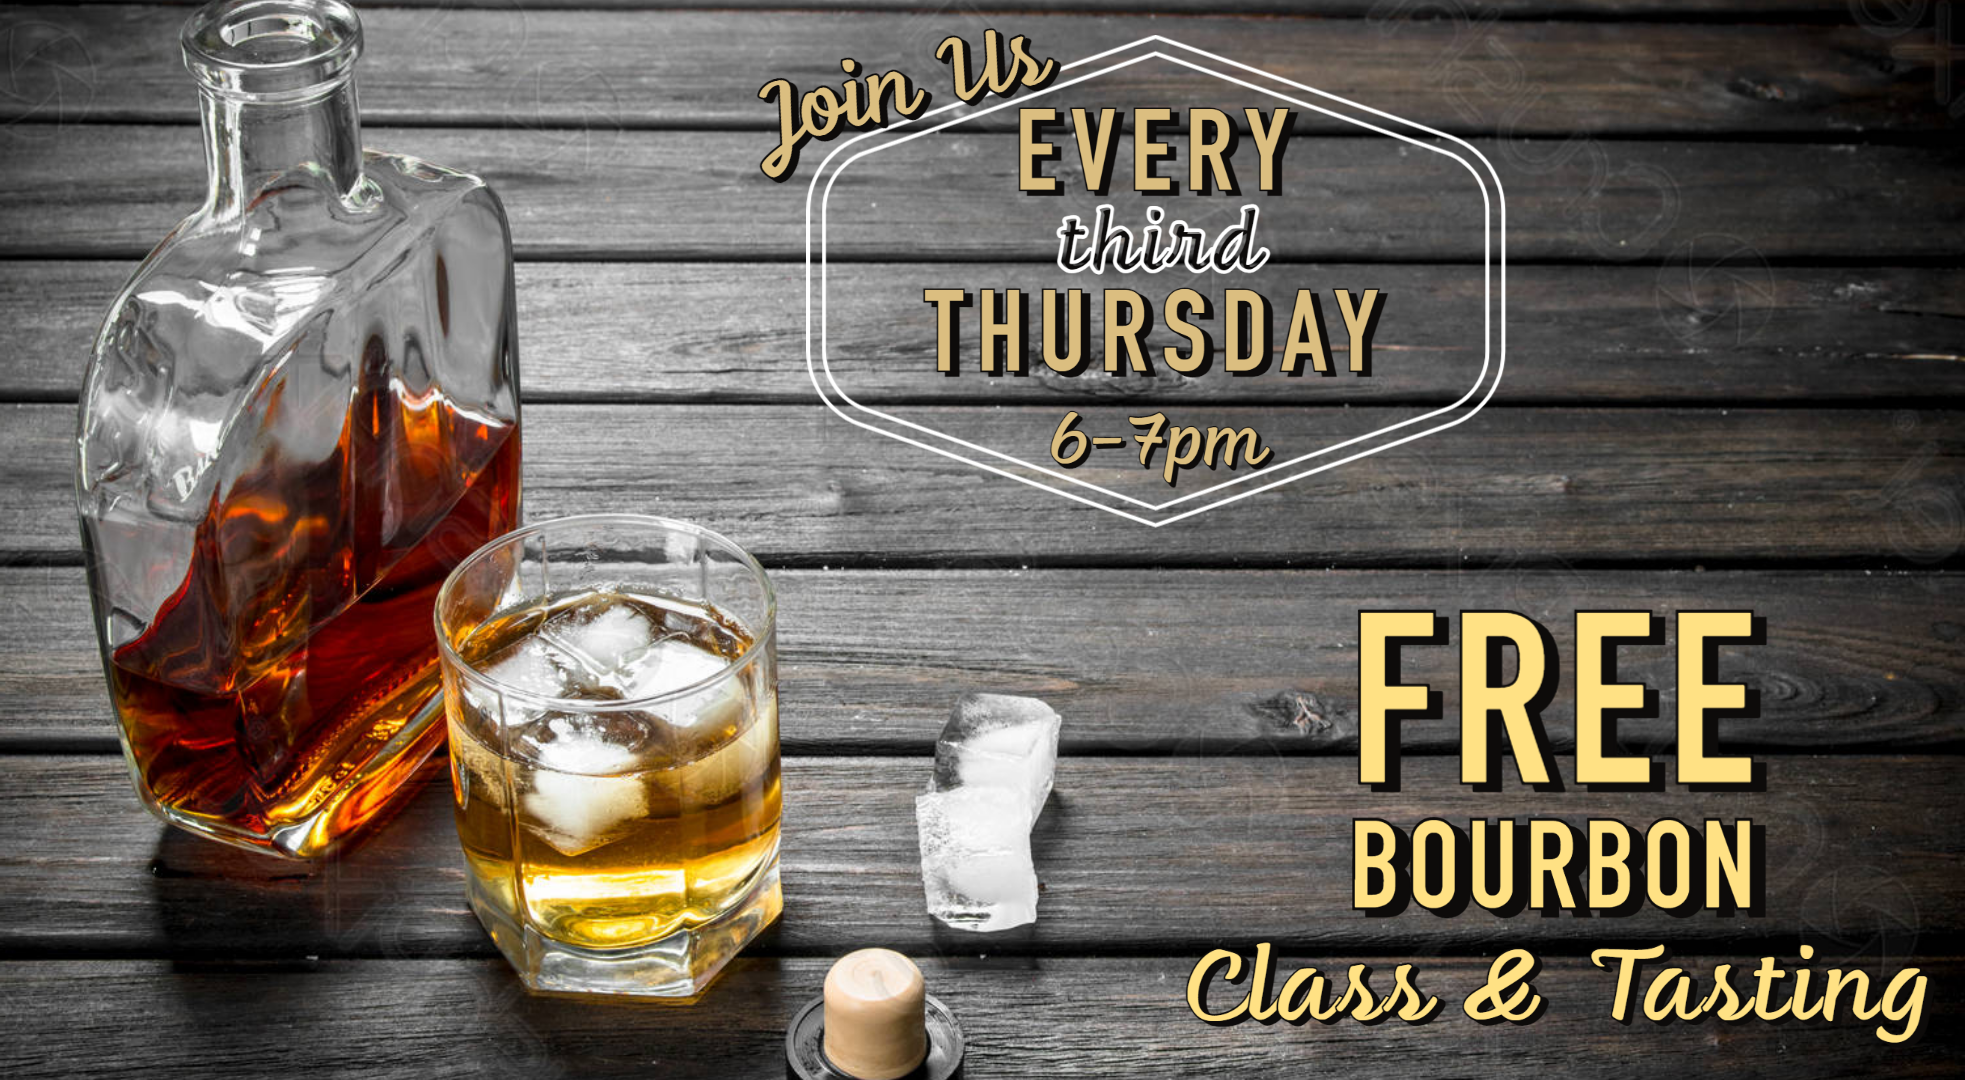 Every 3rd Thursday Bourbon Class & Tasting